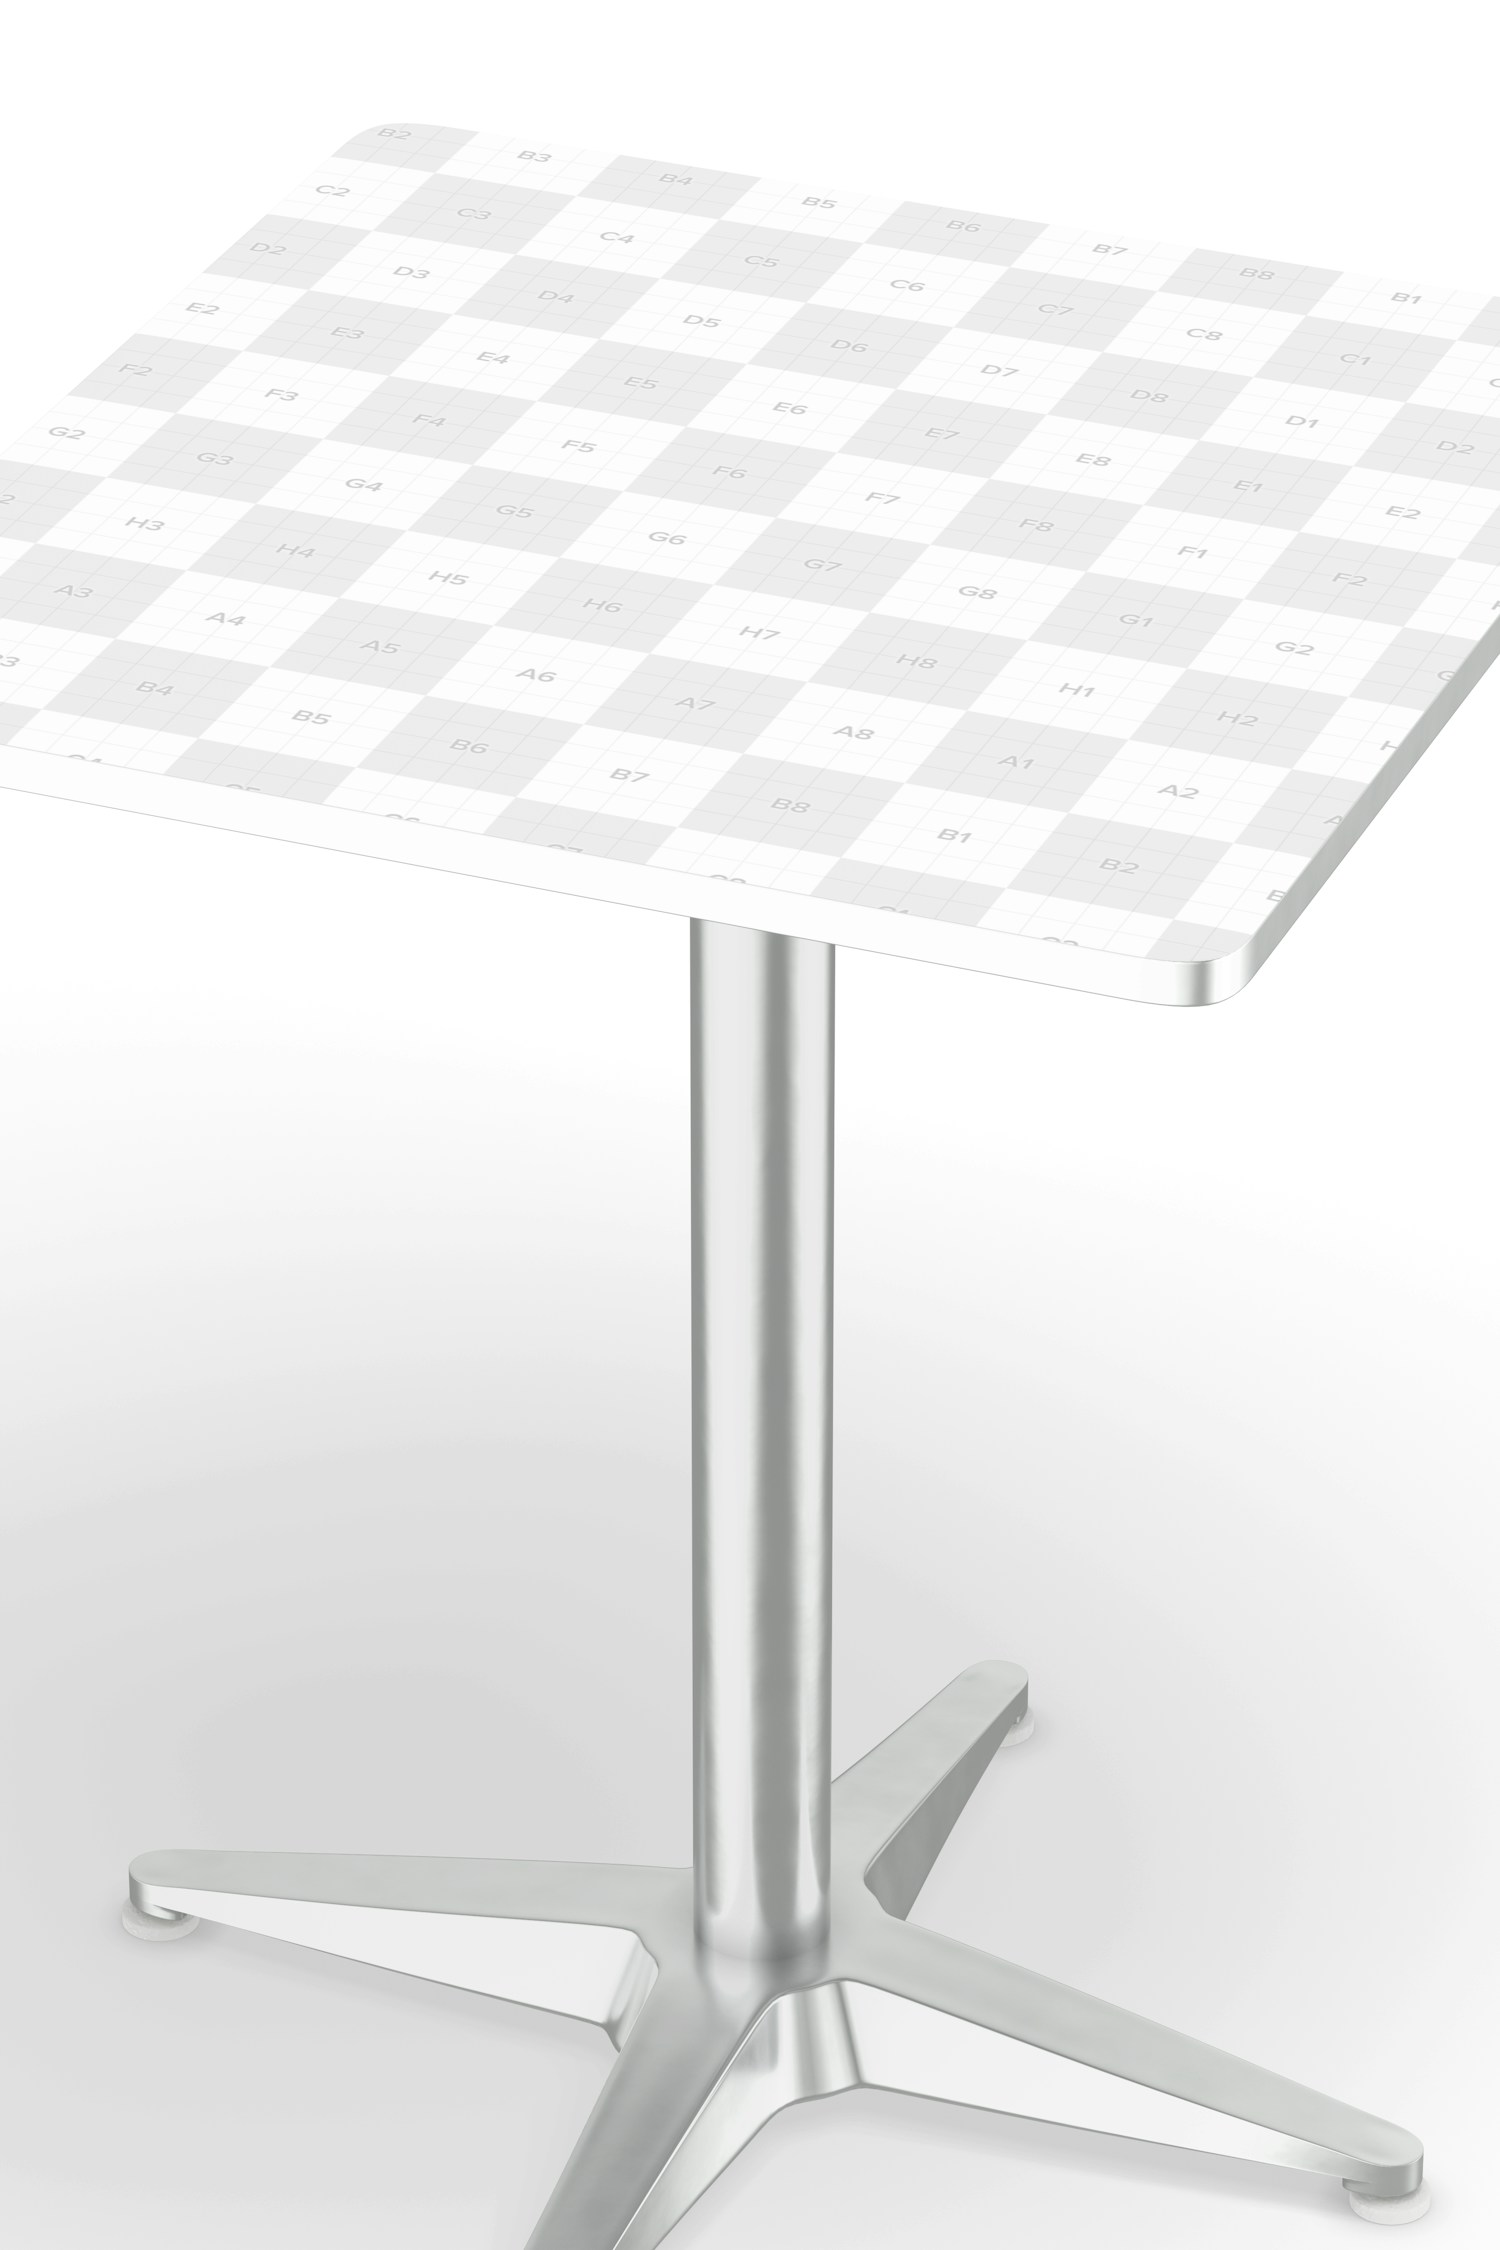 Square Aluminum Restaurant Table Mockup, Close Up